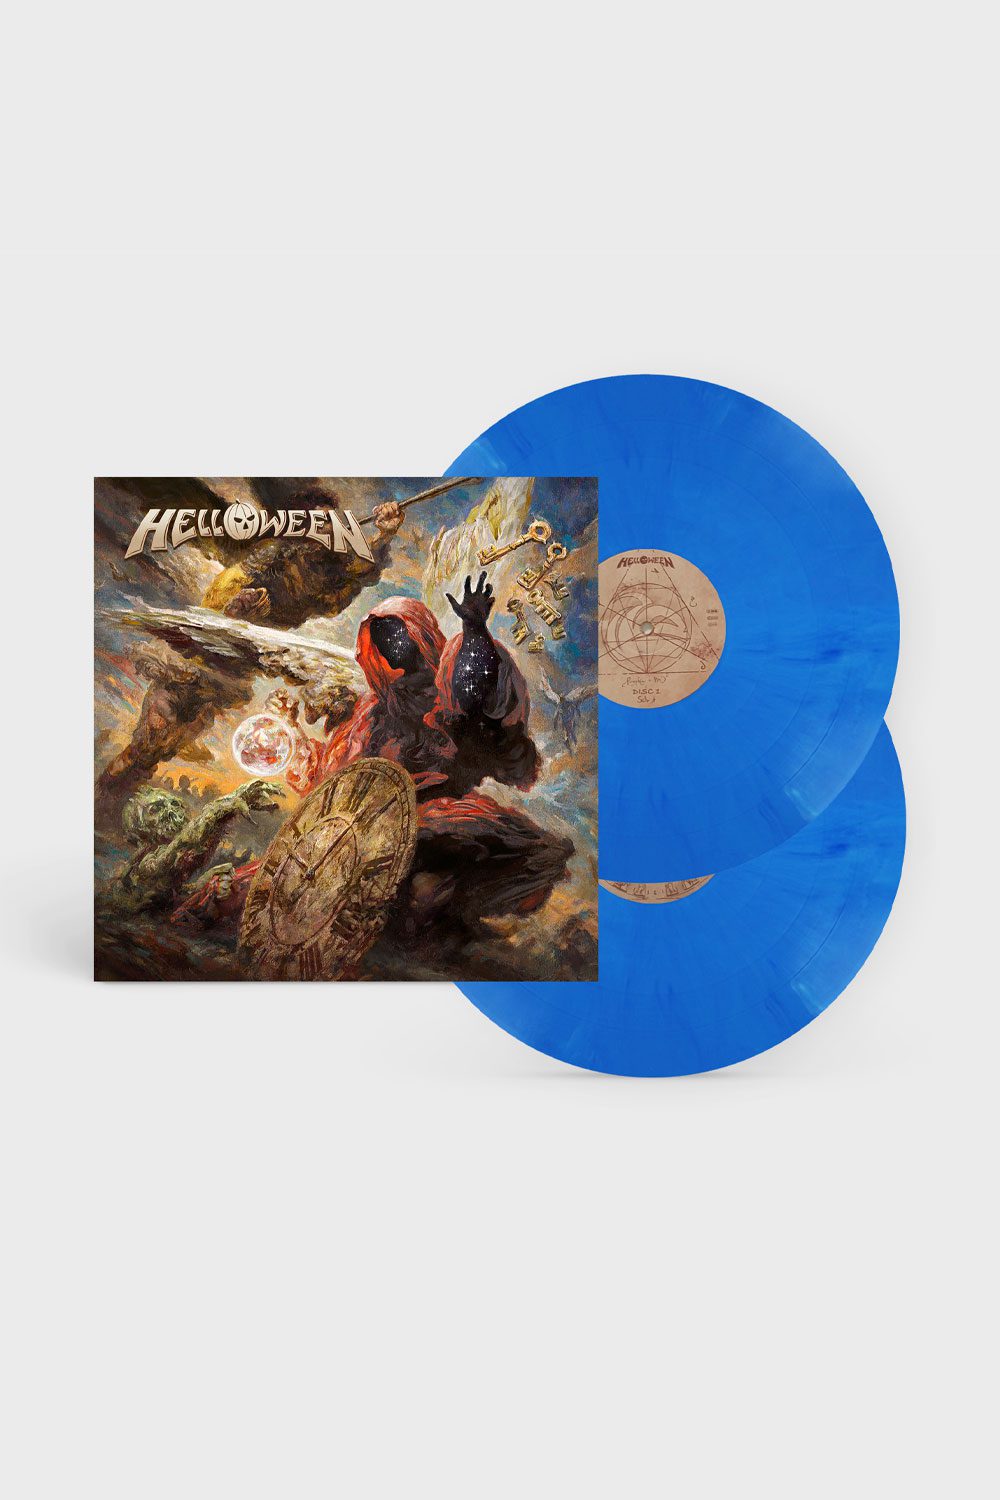 Helloween BLUE/WHITE VINYL 2 LP - VISION MERCH